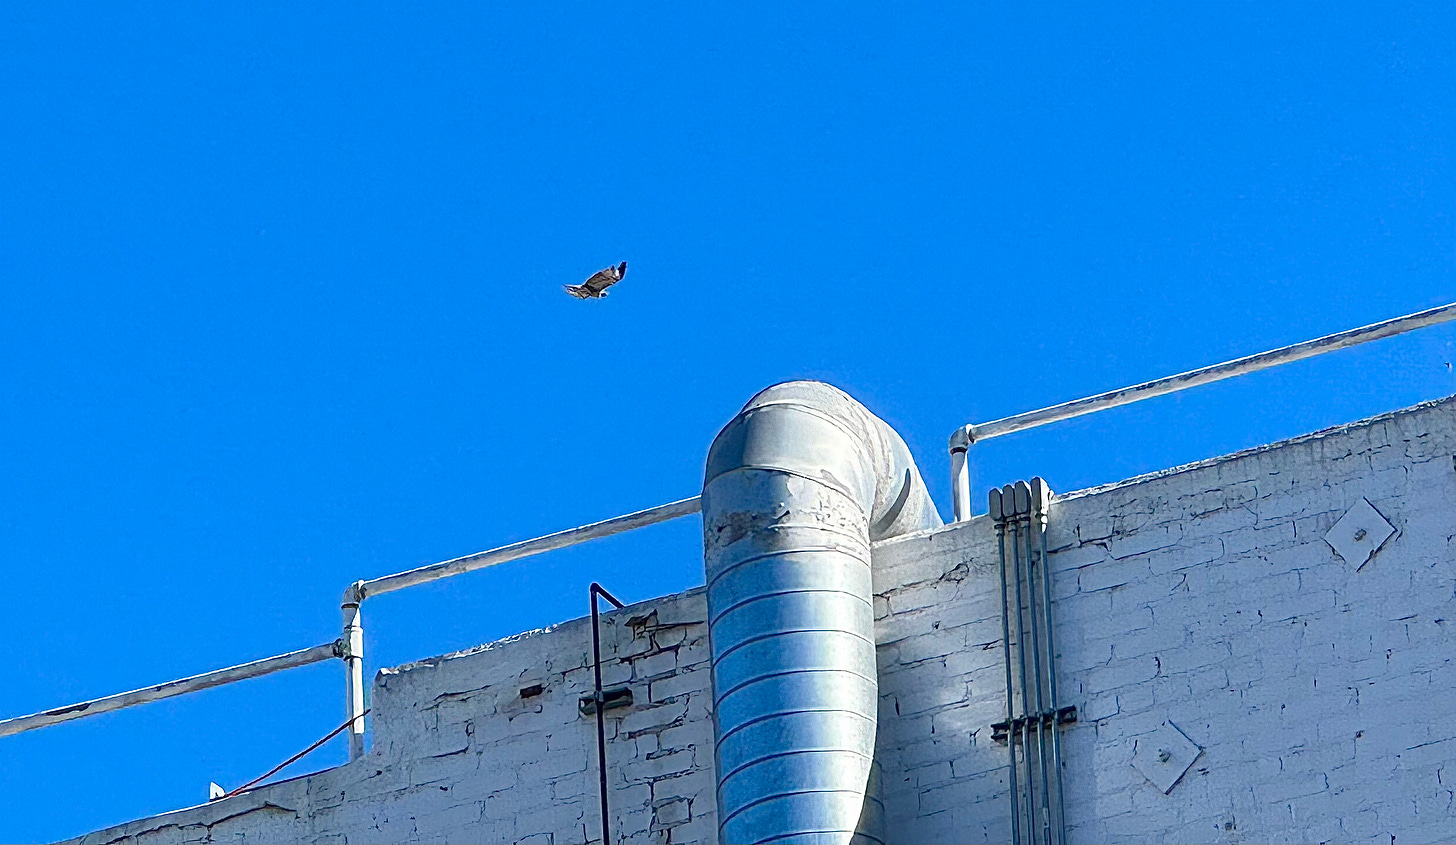 Hawk over an urban building